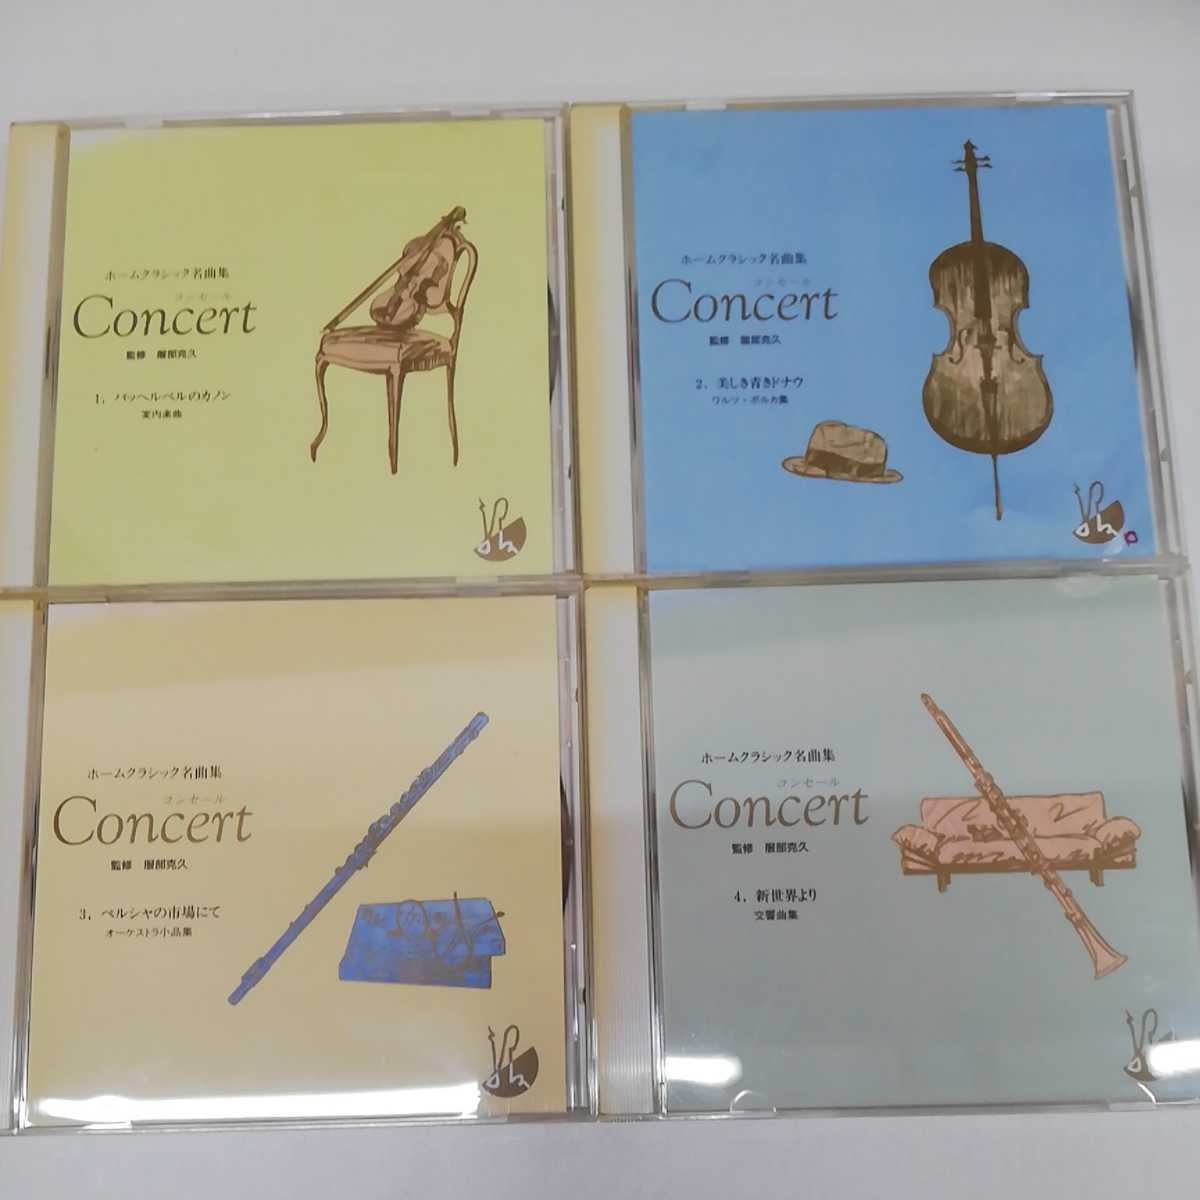 CD 全12巻 ホームクラシック名曲集 コンセール Concert OCD-12011 ~ 12012 14巻セット クラシック 大全集 ユーキャン  交響曲 バレエ音楽